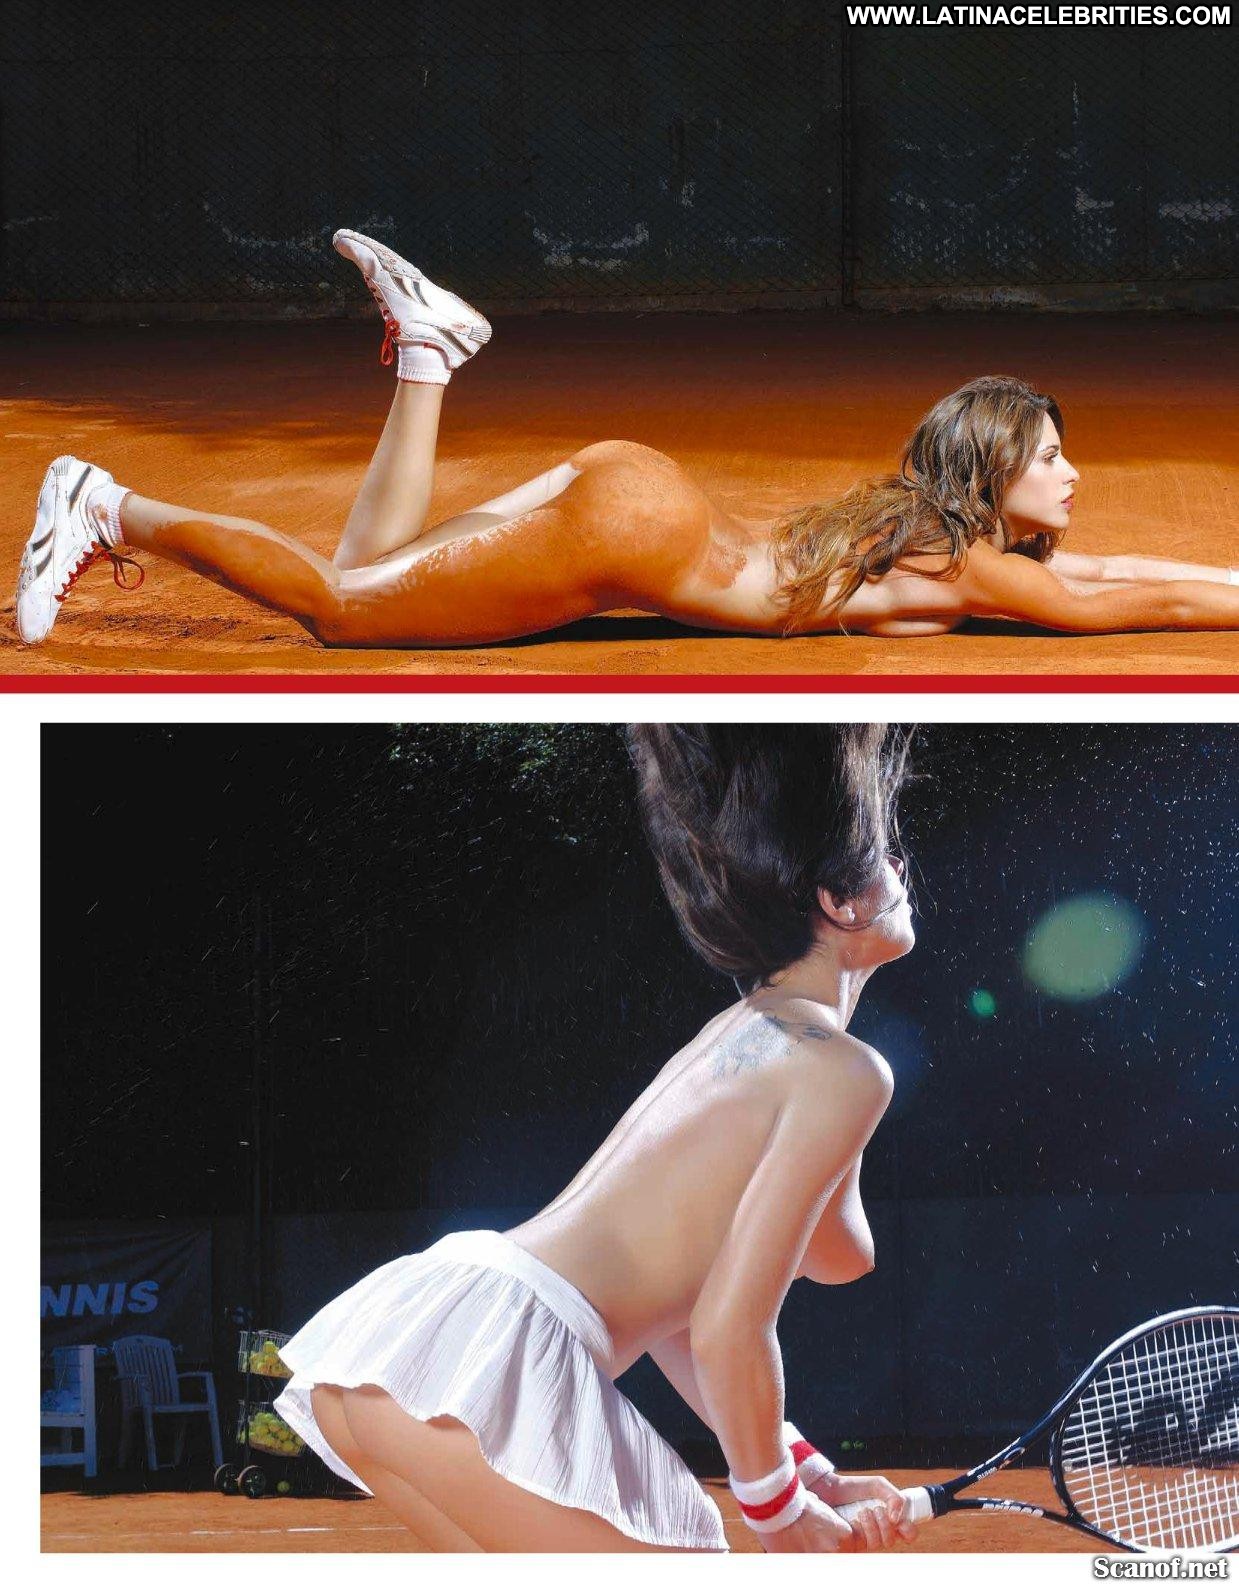 Playboy Croatia Victoria Vanucci Medium Tits Posing Hot Athletic Playmate C...